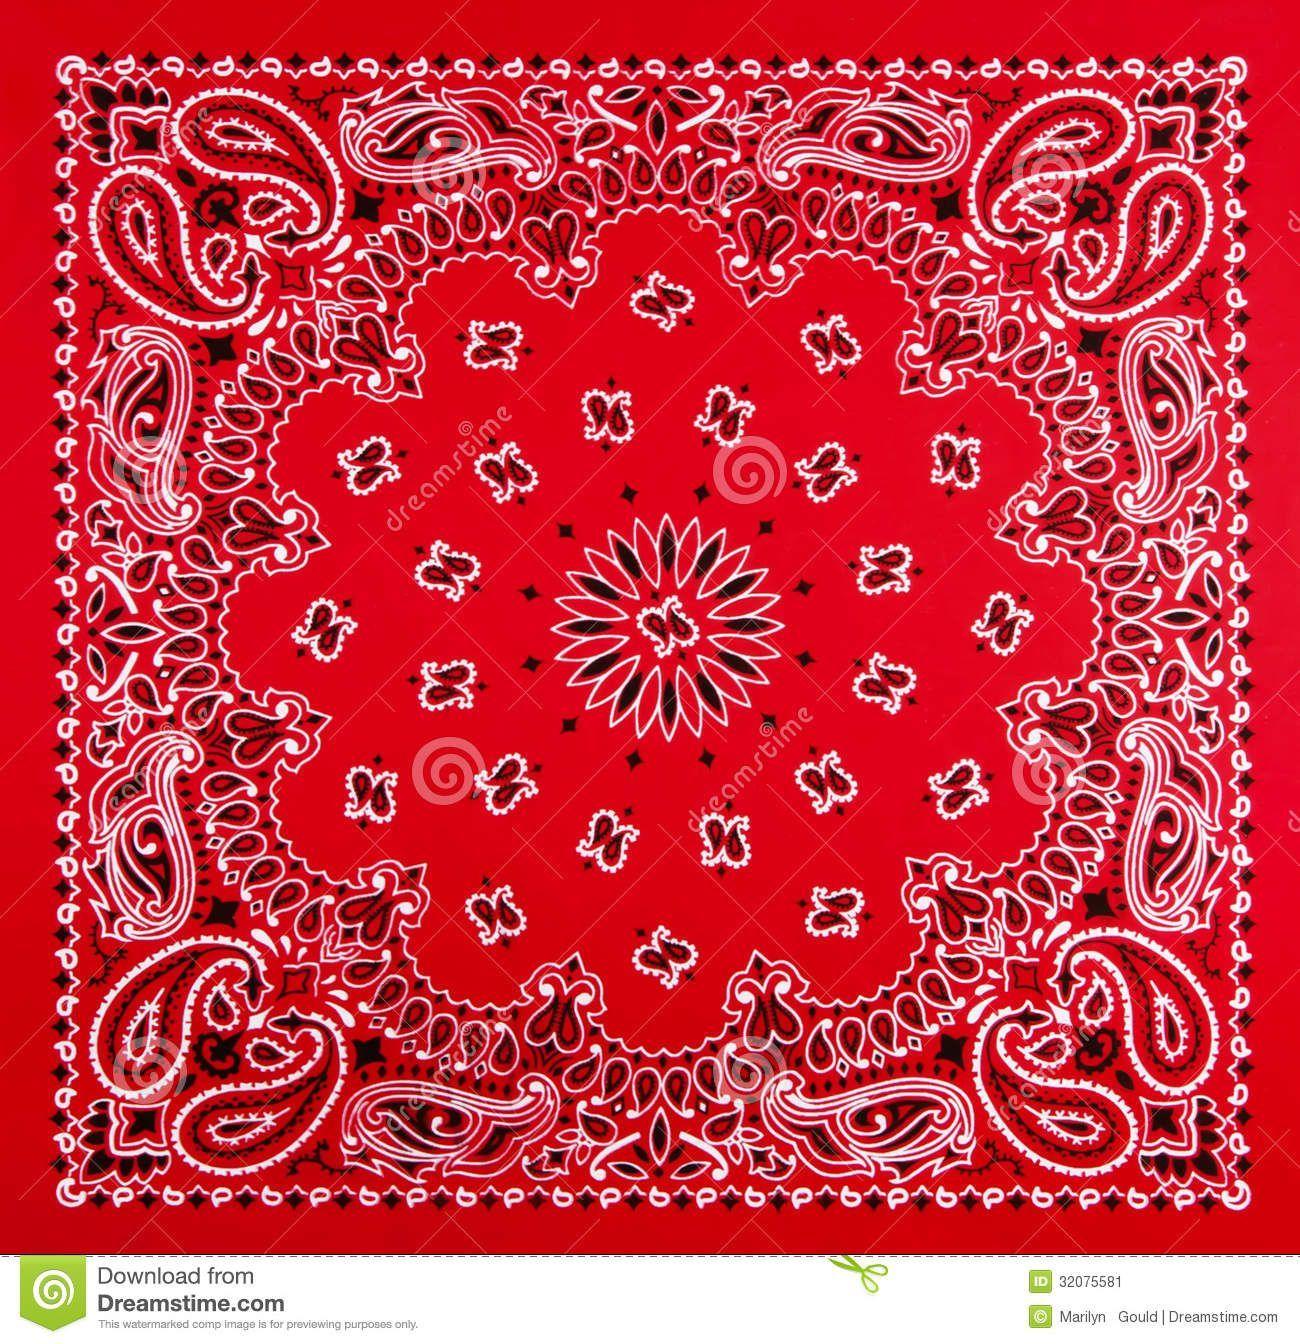 Red bandana wallpaper Gallery